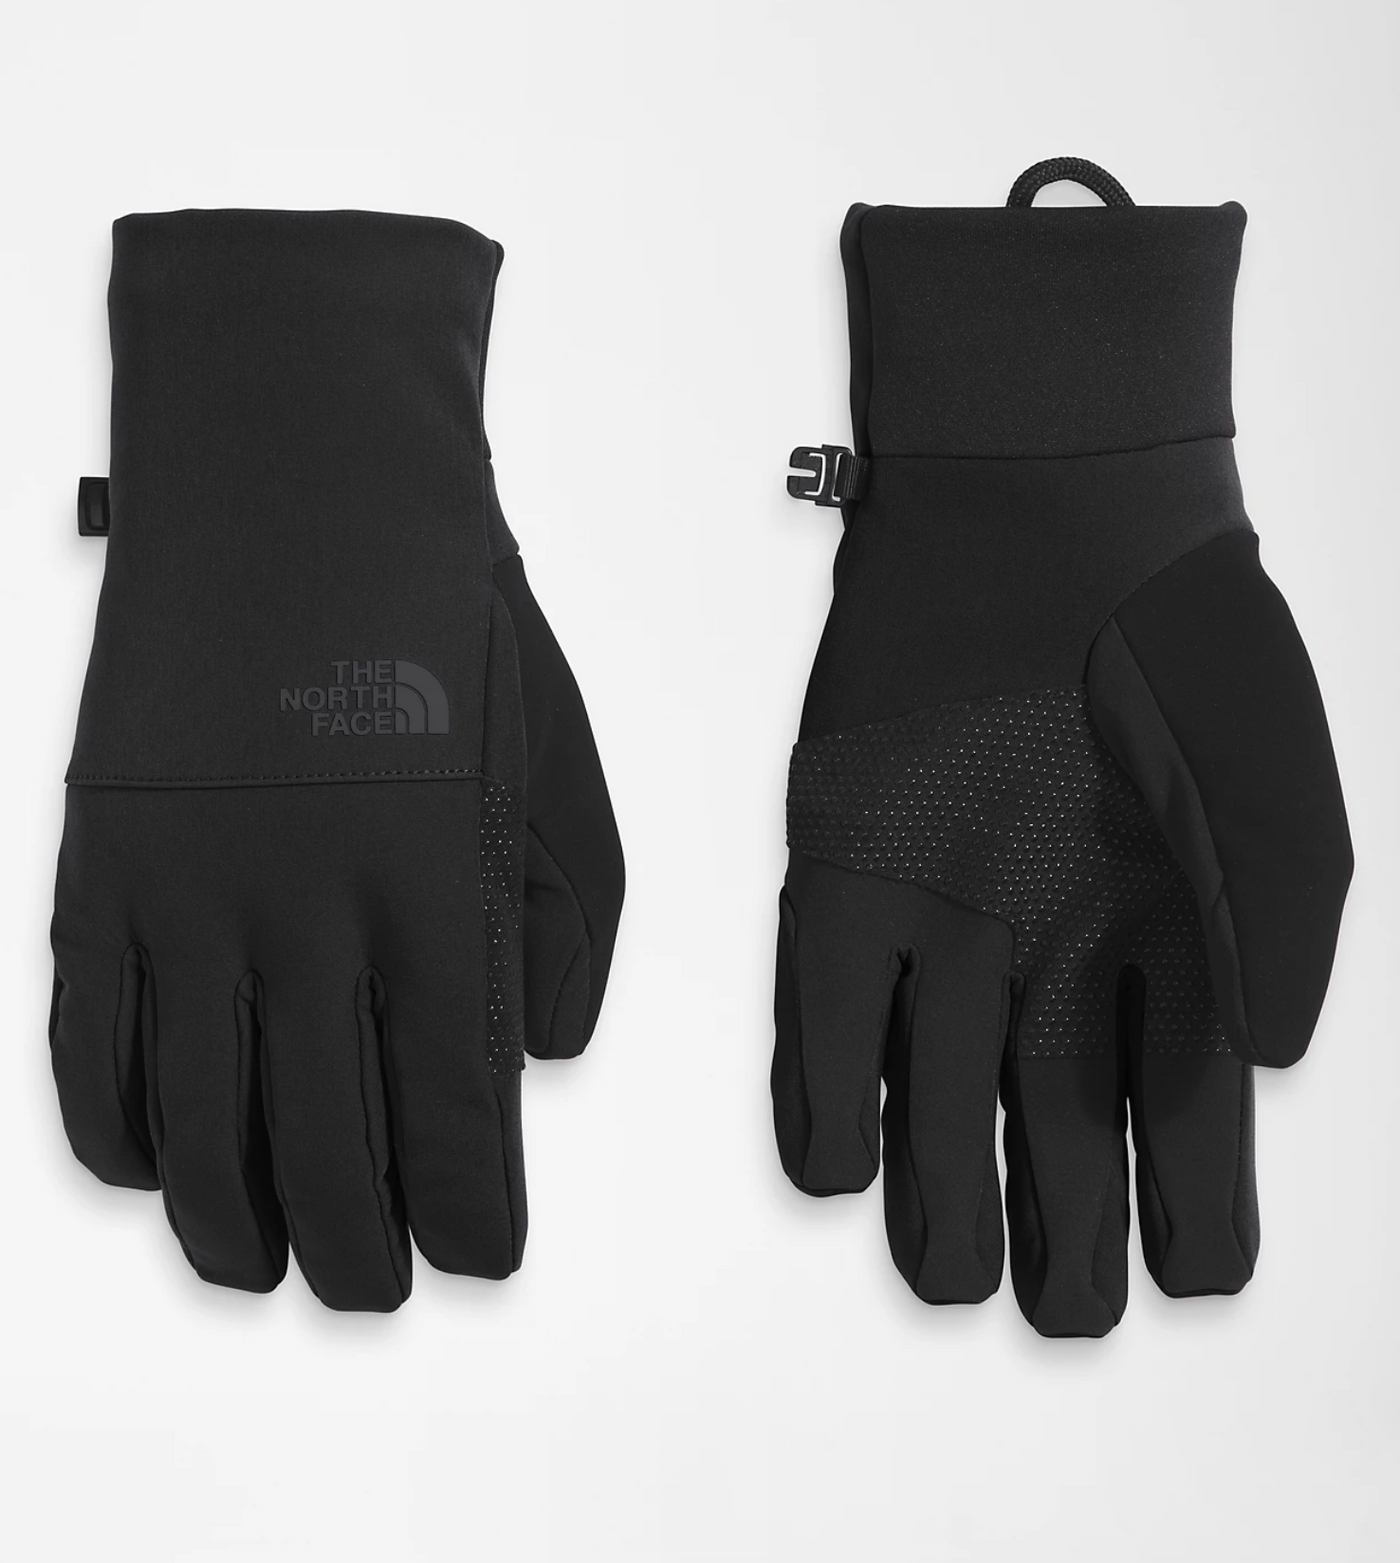 THE NORTH FACE Men's Apex Insulated Etip Glove TNF Black